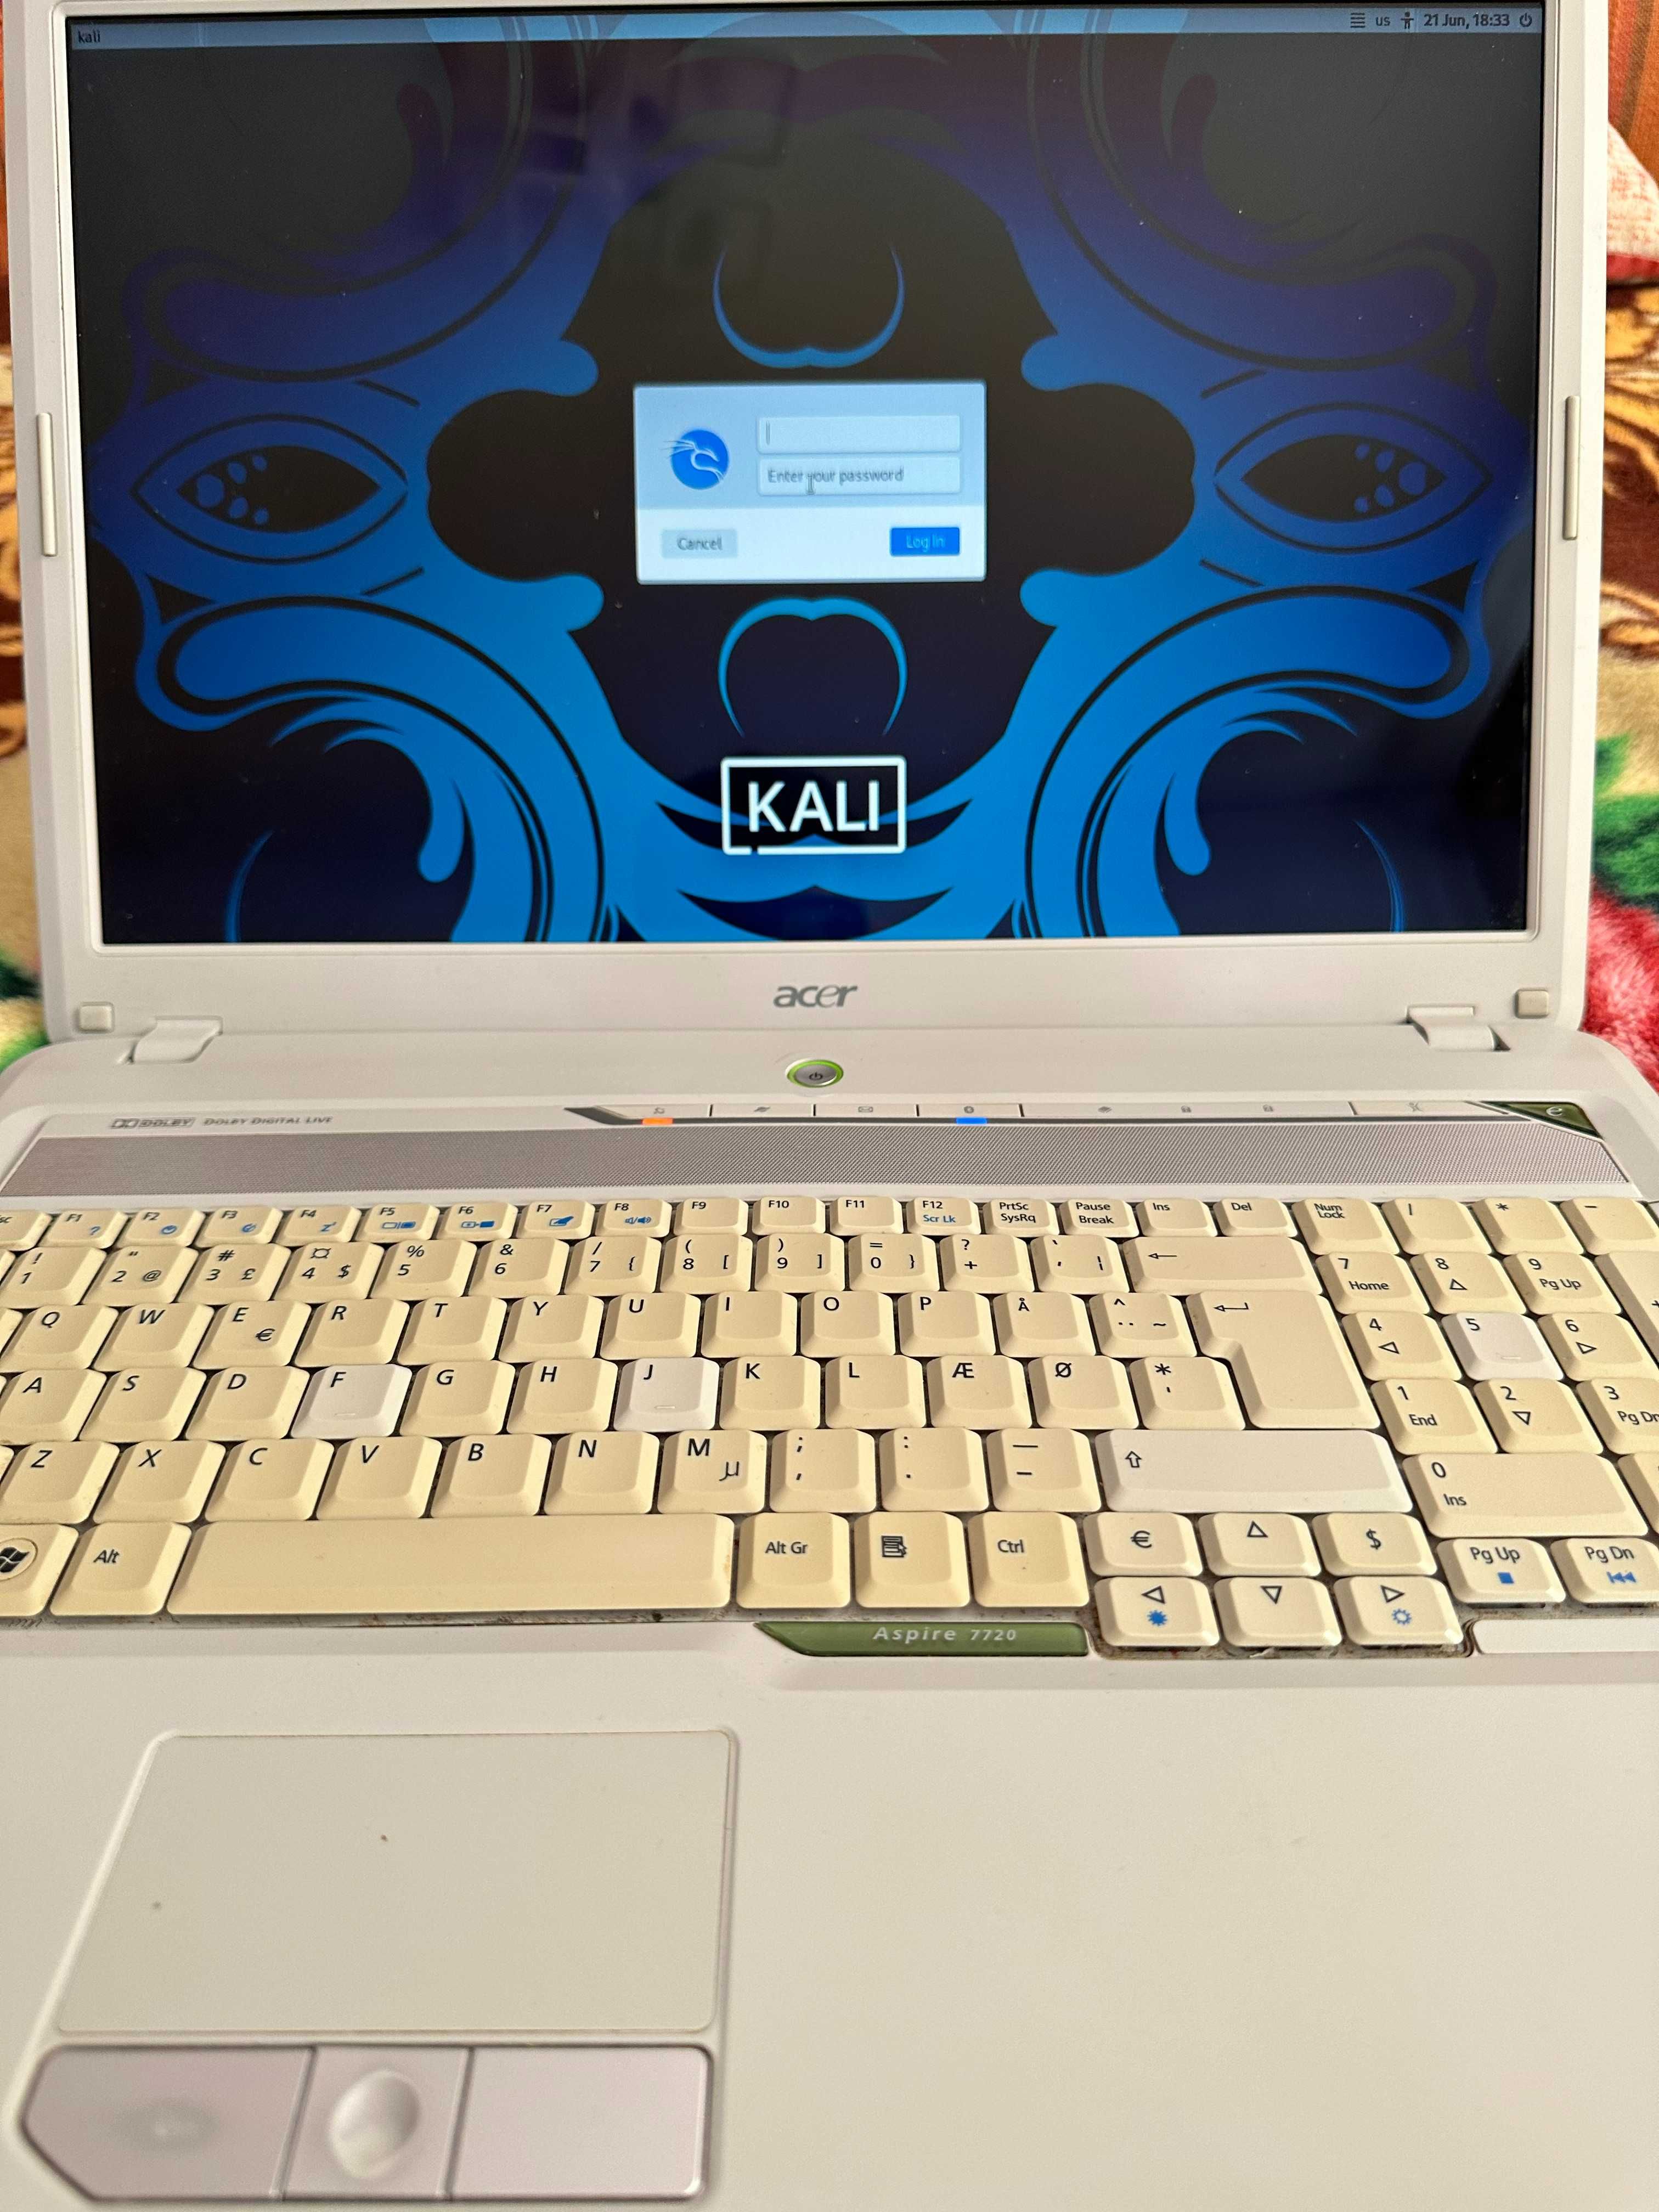 Laptop Acer Aspire 7720